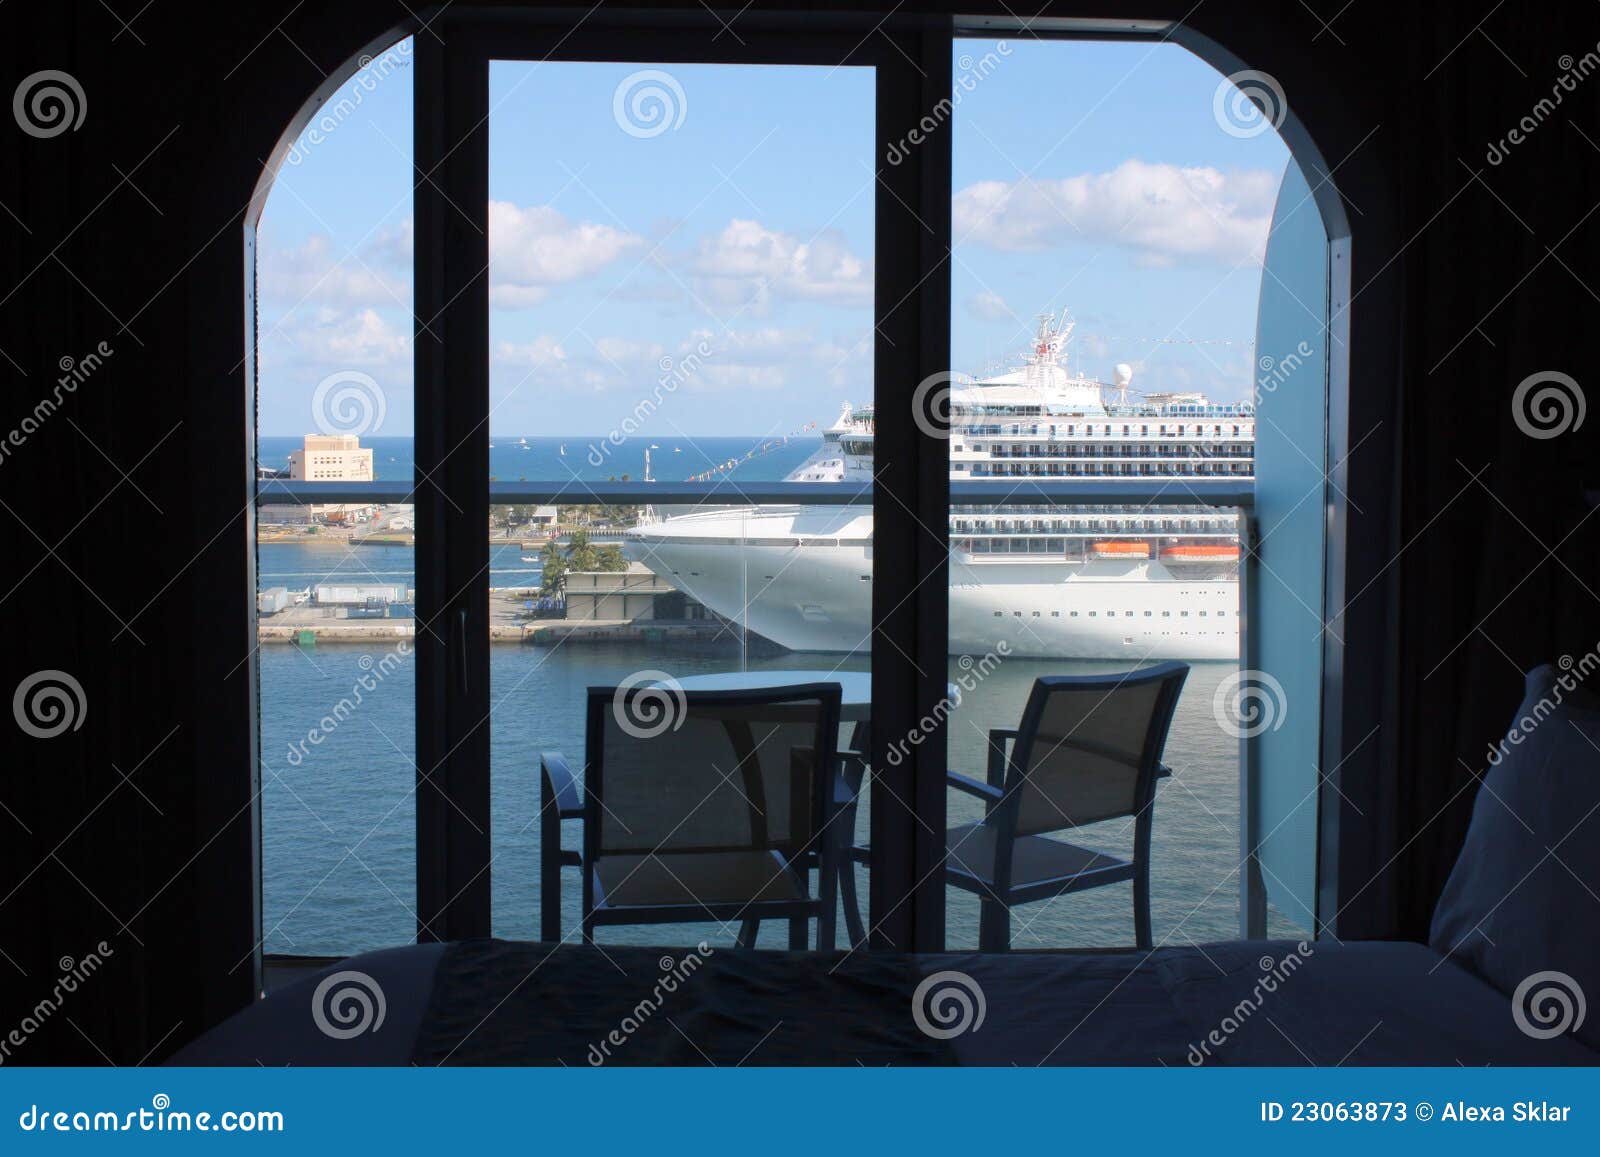 oasis of the seas cruise ship balcony